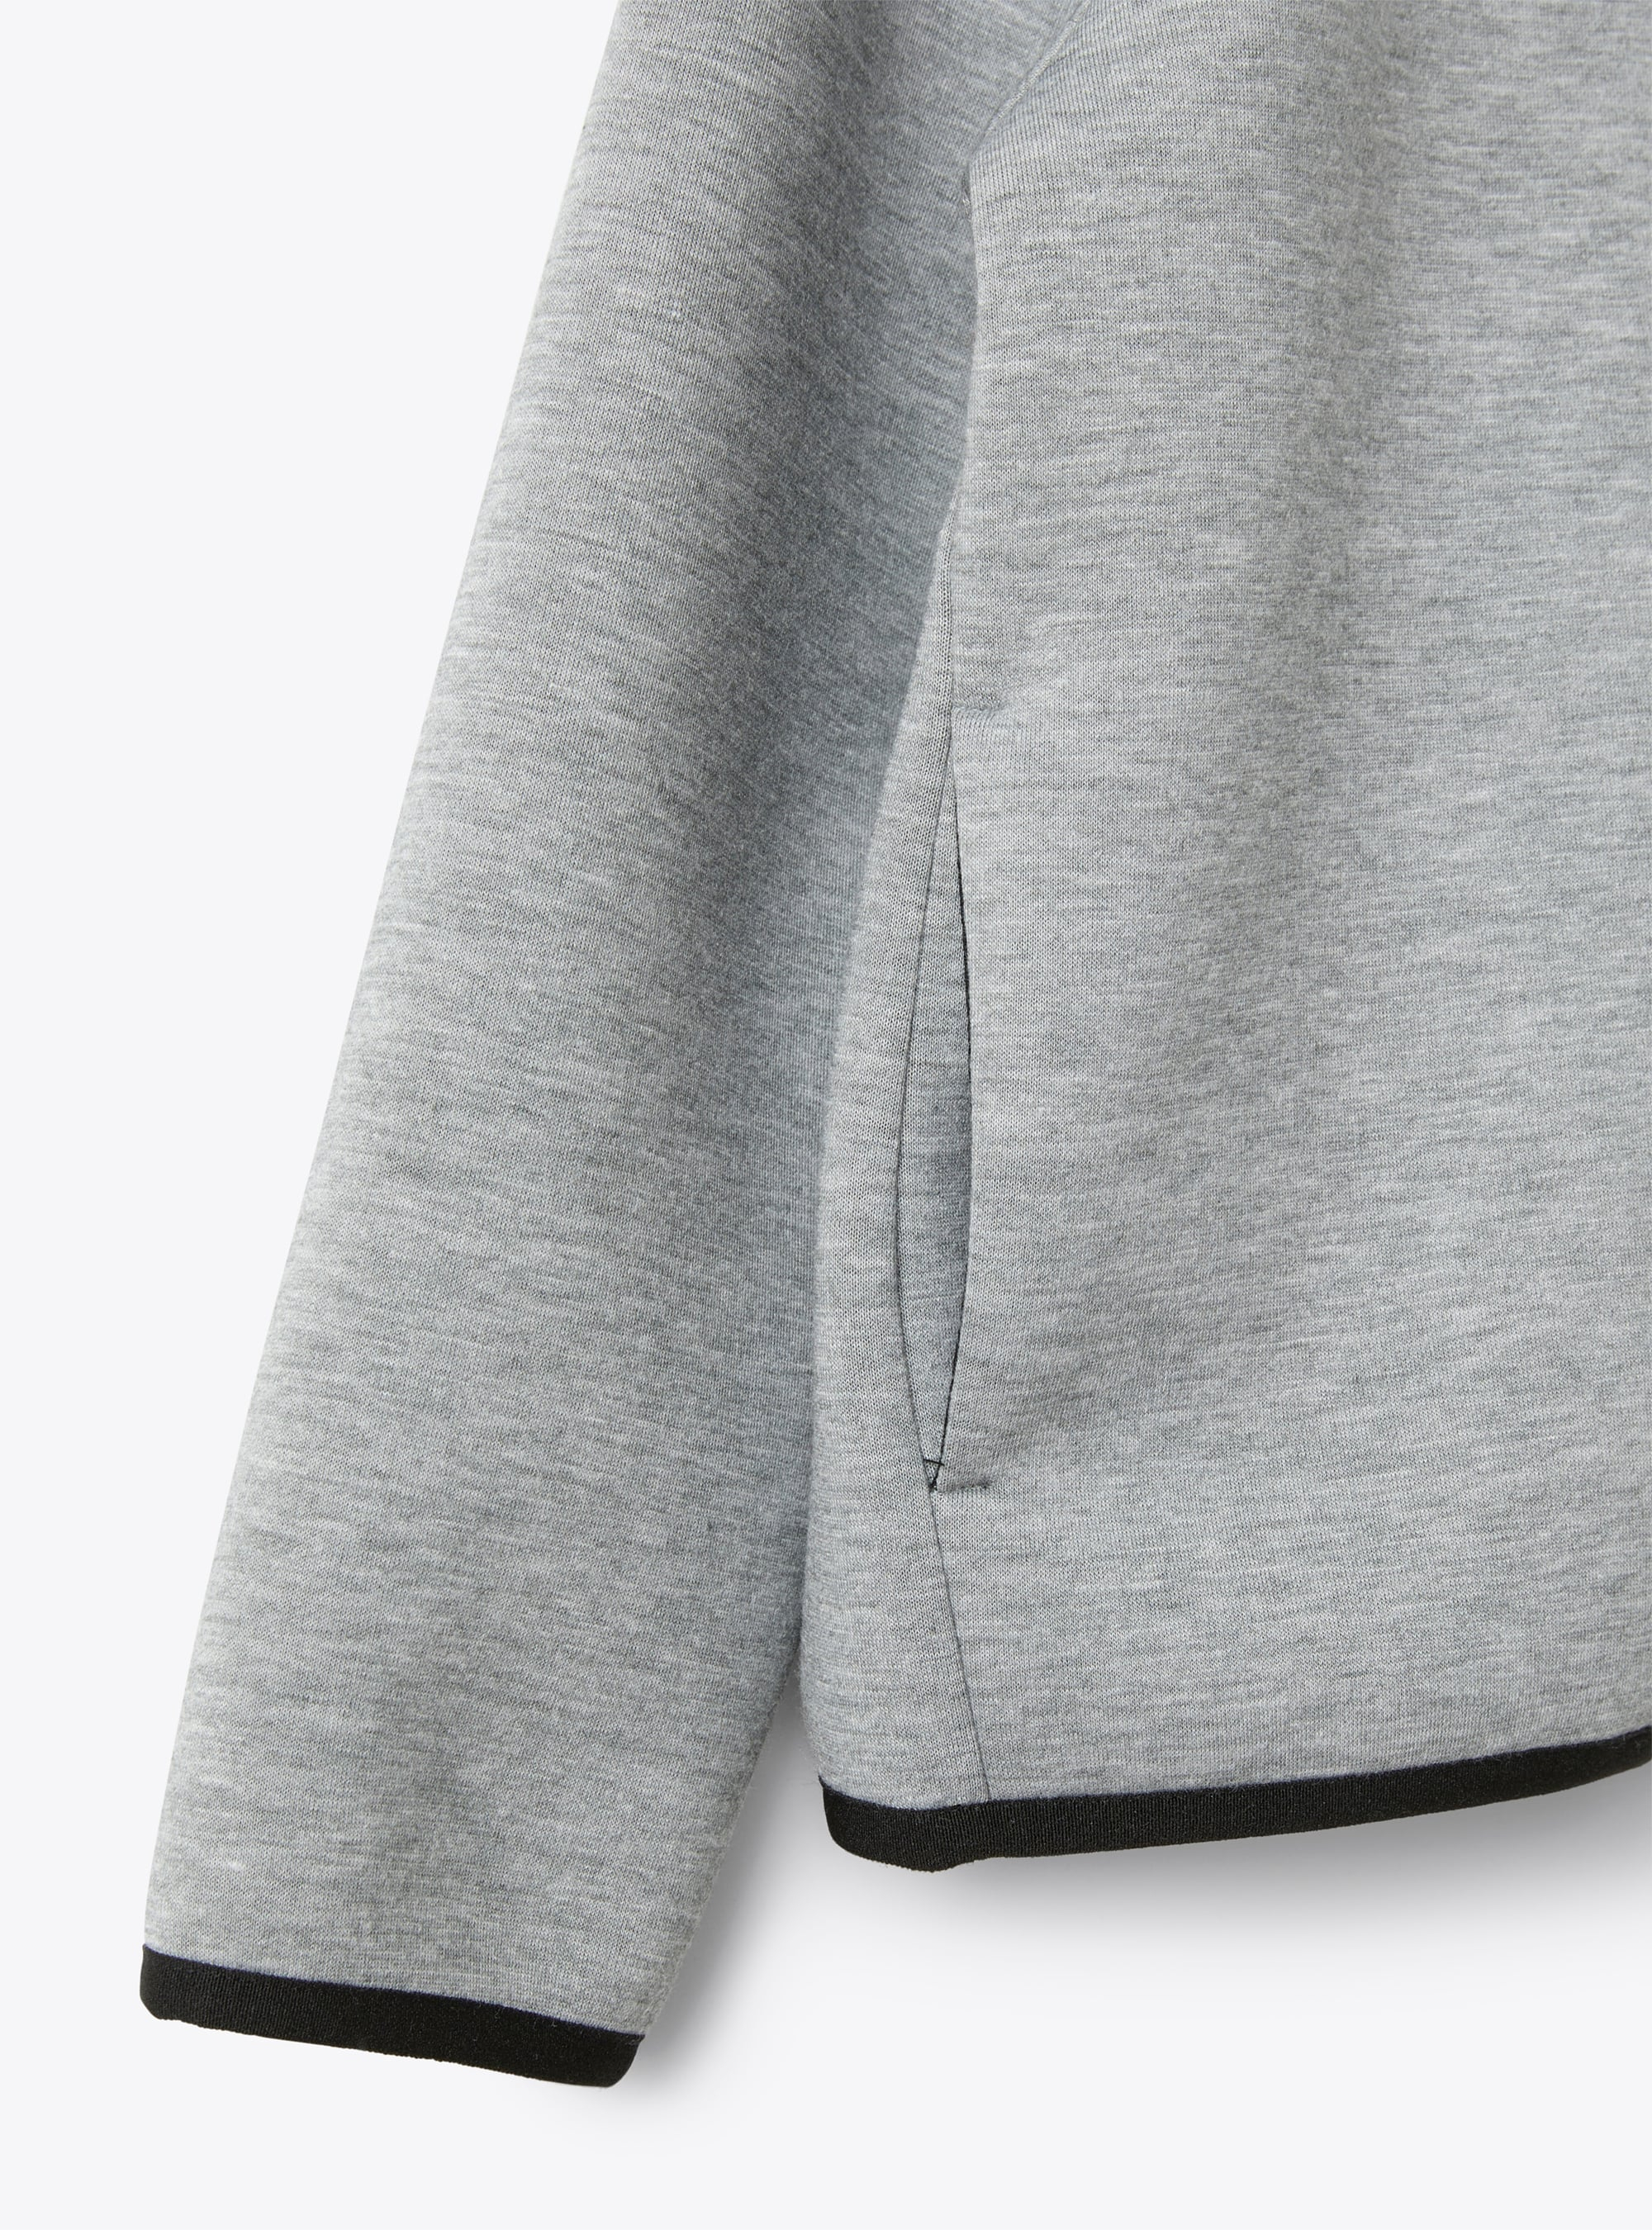 Sweat jacket in two-tone neoprene - Grey | Il Gufo